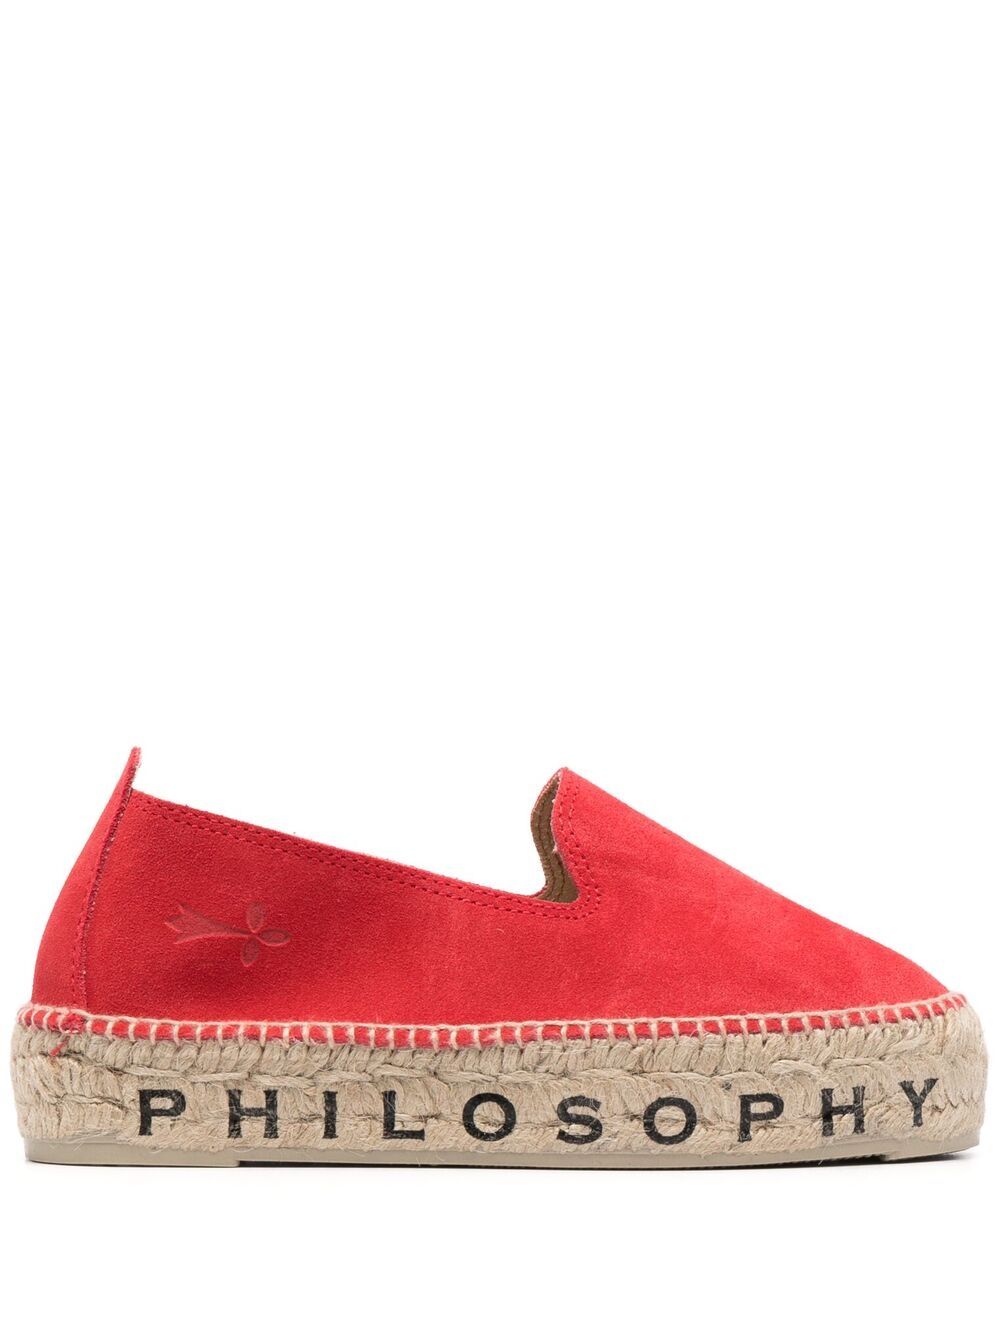 Philosophy X Manebì Espadrillas дамски обувки Manebi 840135727_37